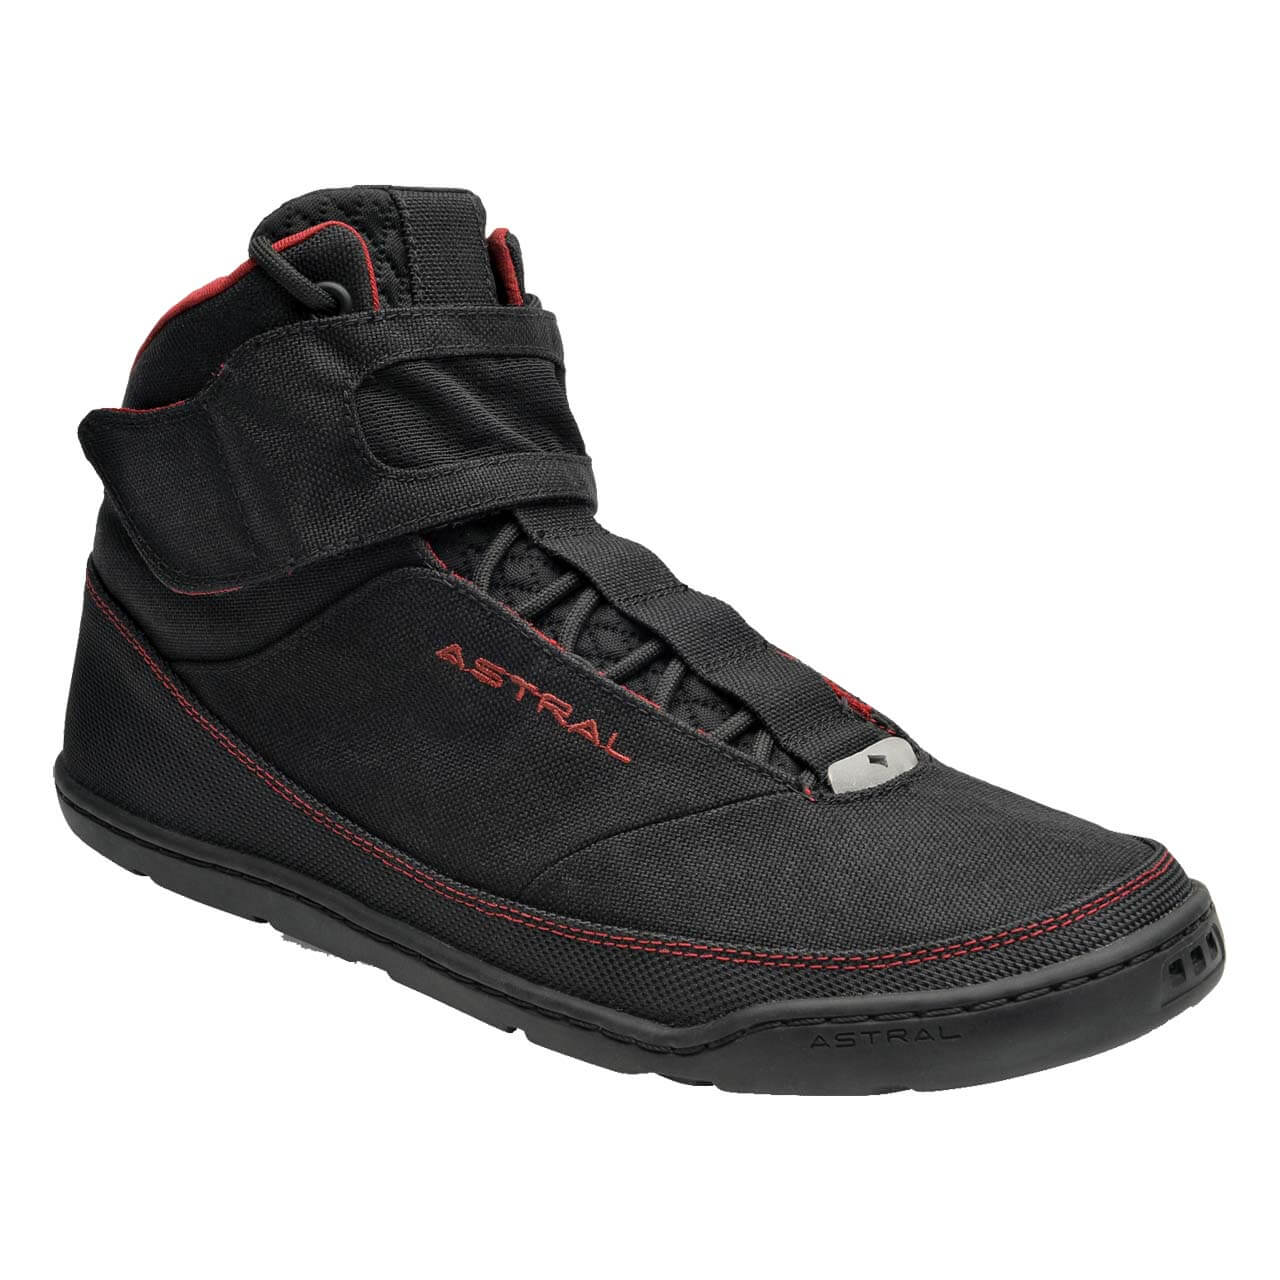 Astral Hiyak Kajak Boots - Black, US 11 / EU 45.3